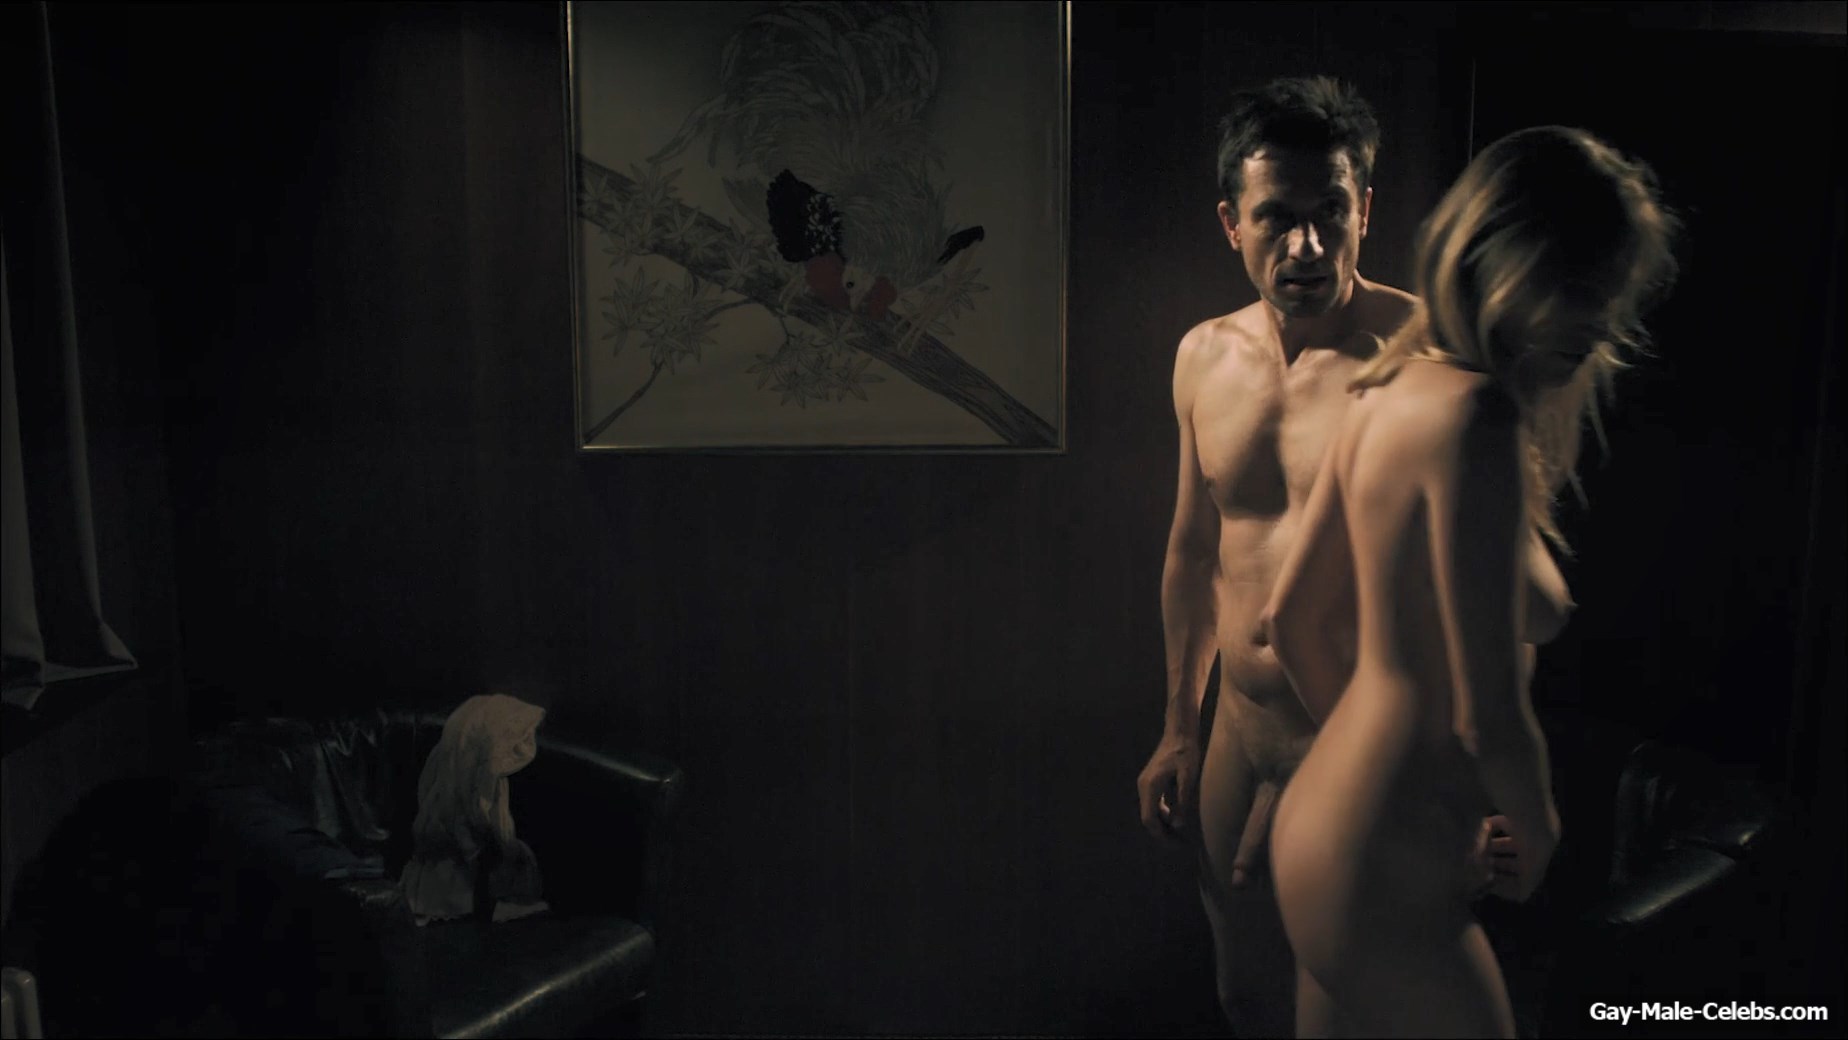 German Actor Oliver Mommsen Frontal Nude Movie Scenes.